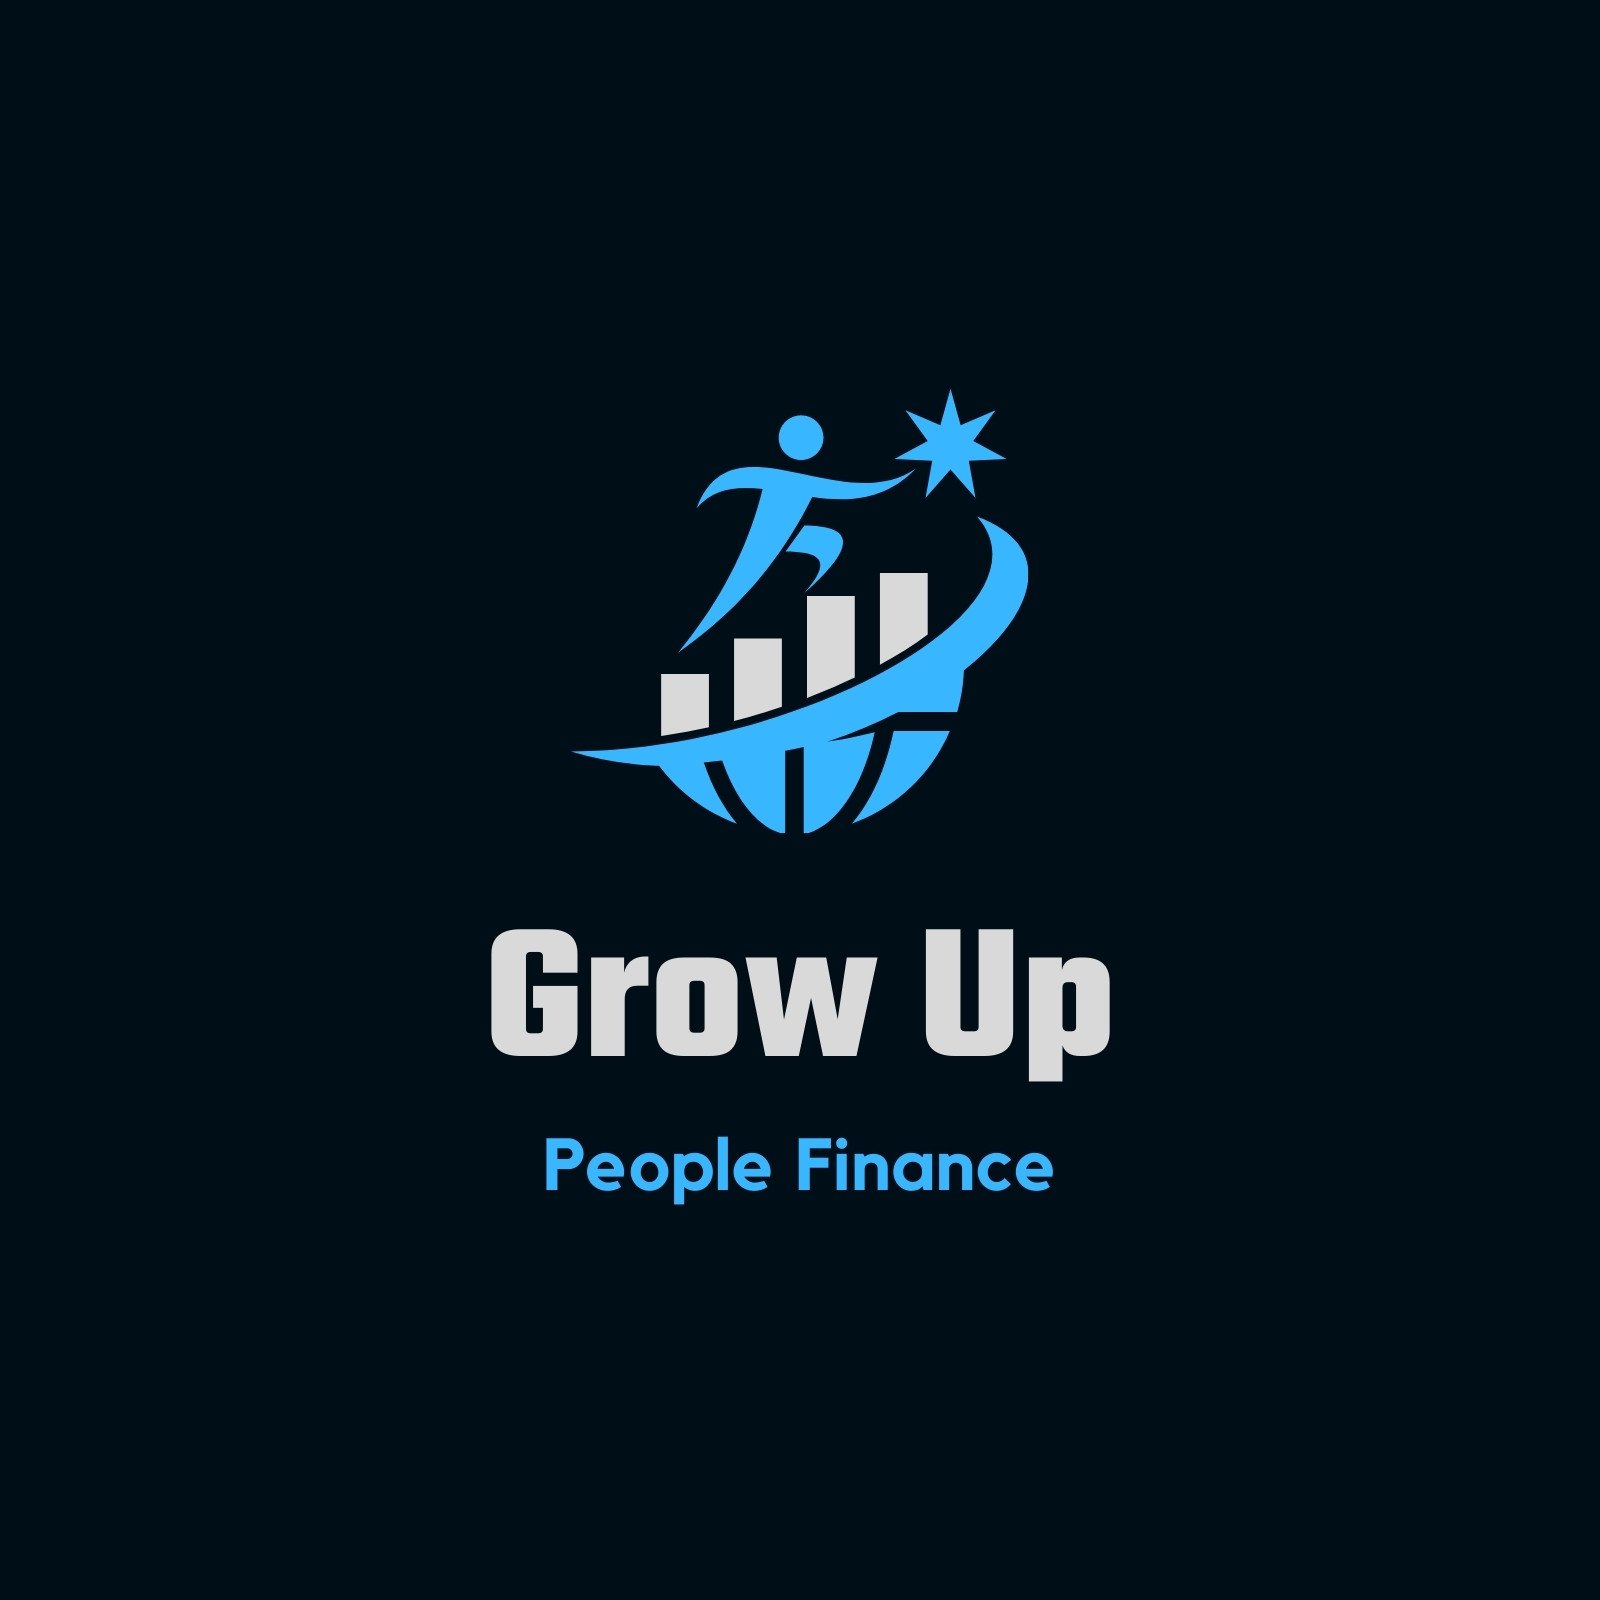 Free finance logo templates to customize